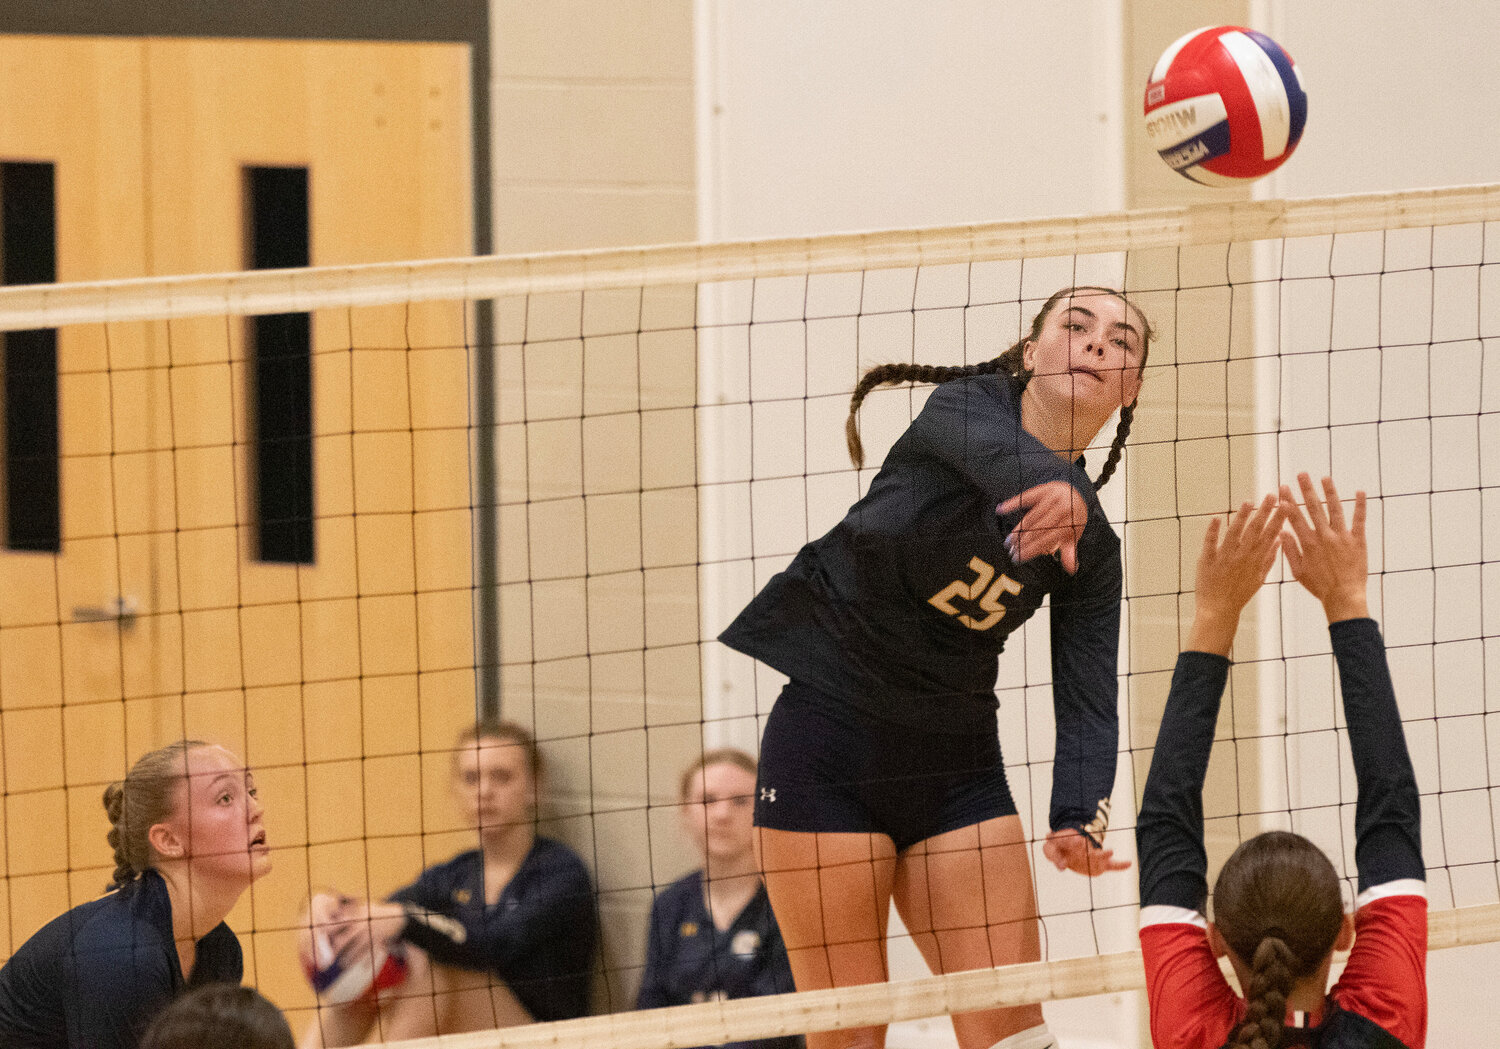 Barrington High School’s Kasey Dillon spikes the volleyball over the net against Lincoln.